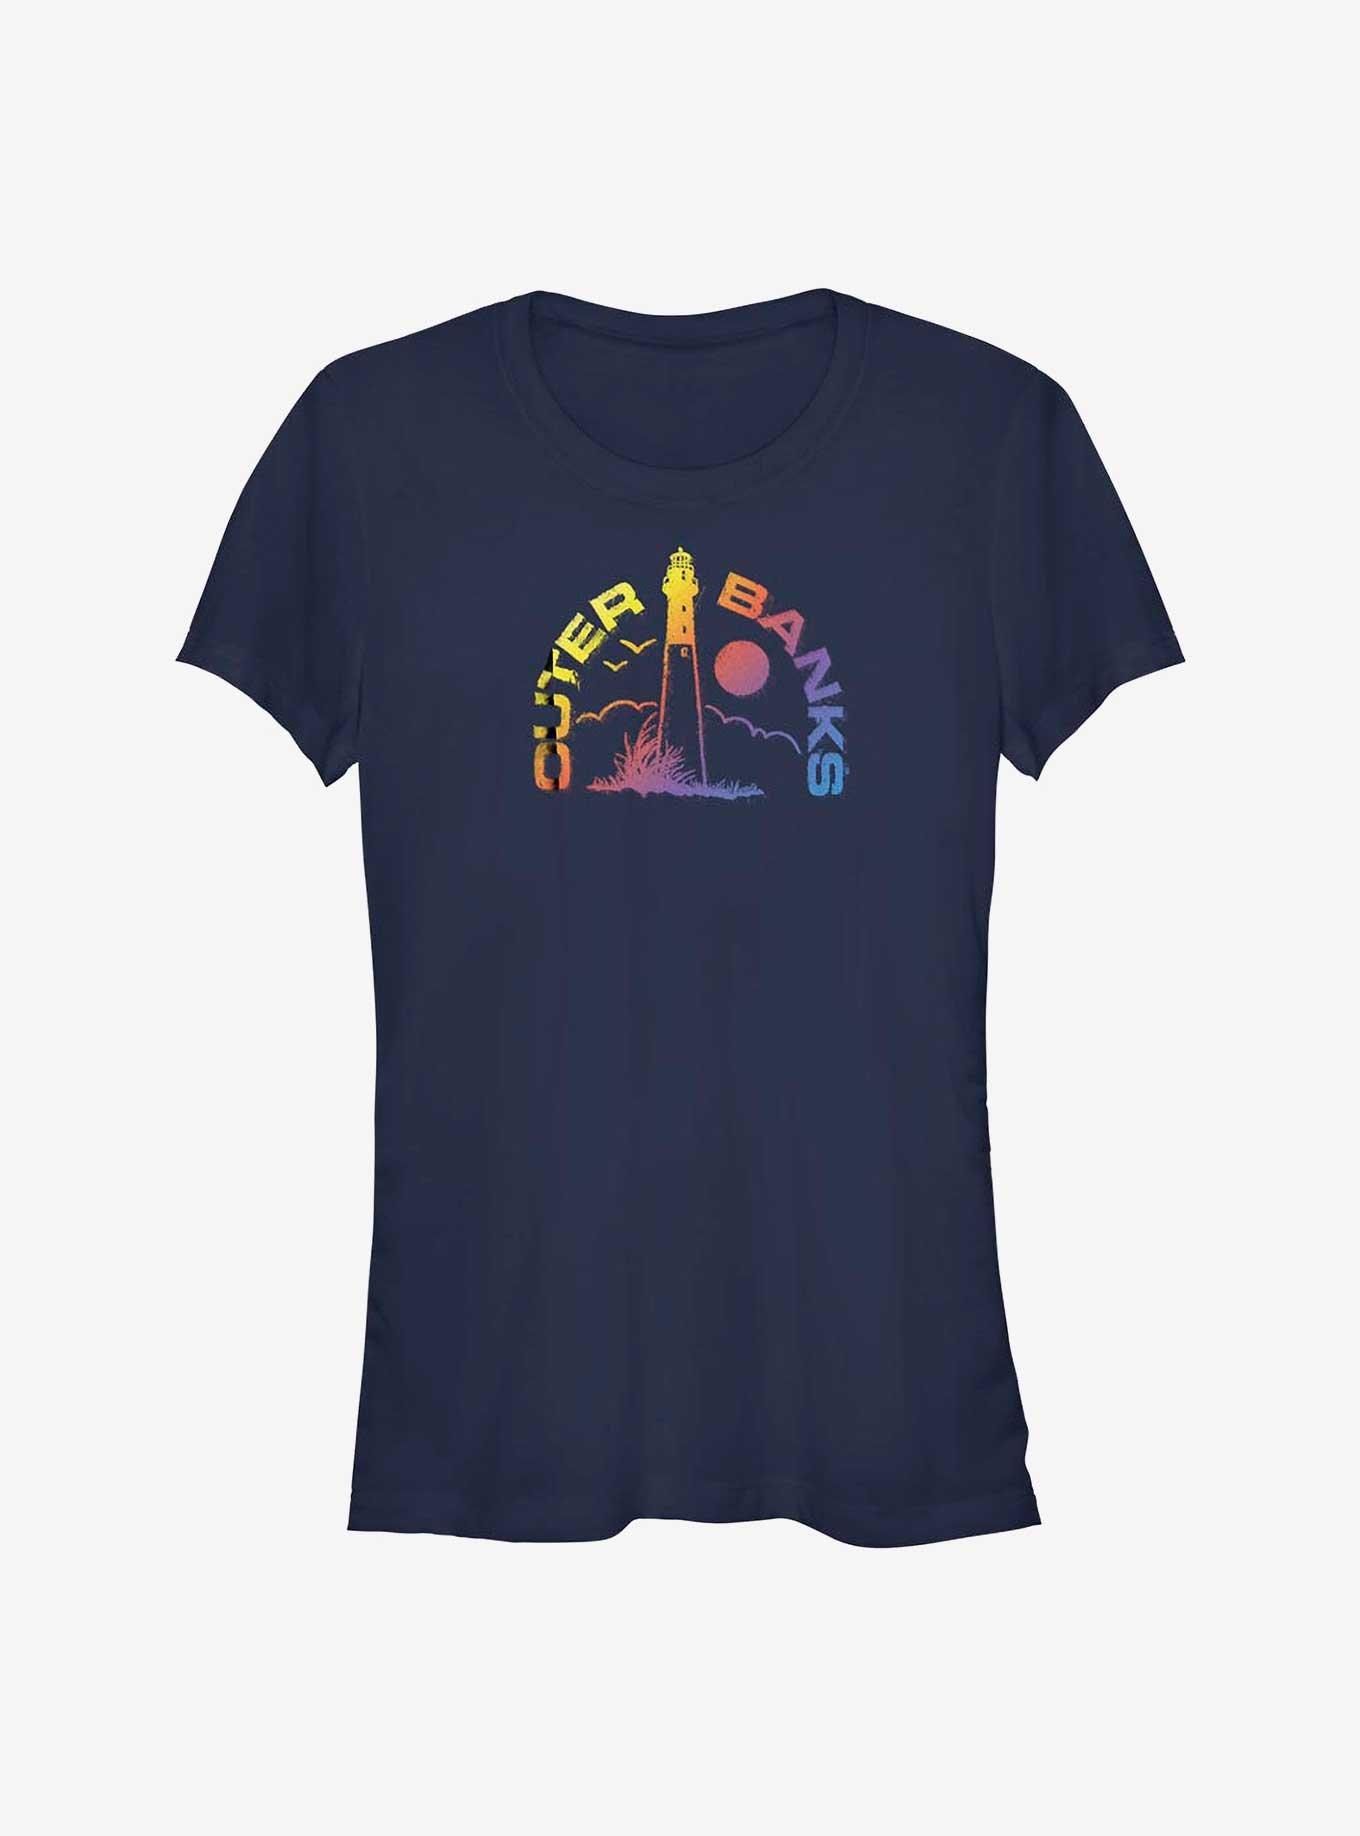 Outer Banks Lighthouse Girls T-Shirt, NAVY, hi-res